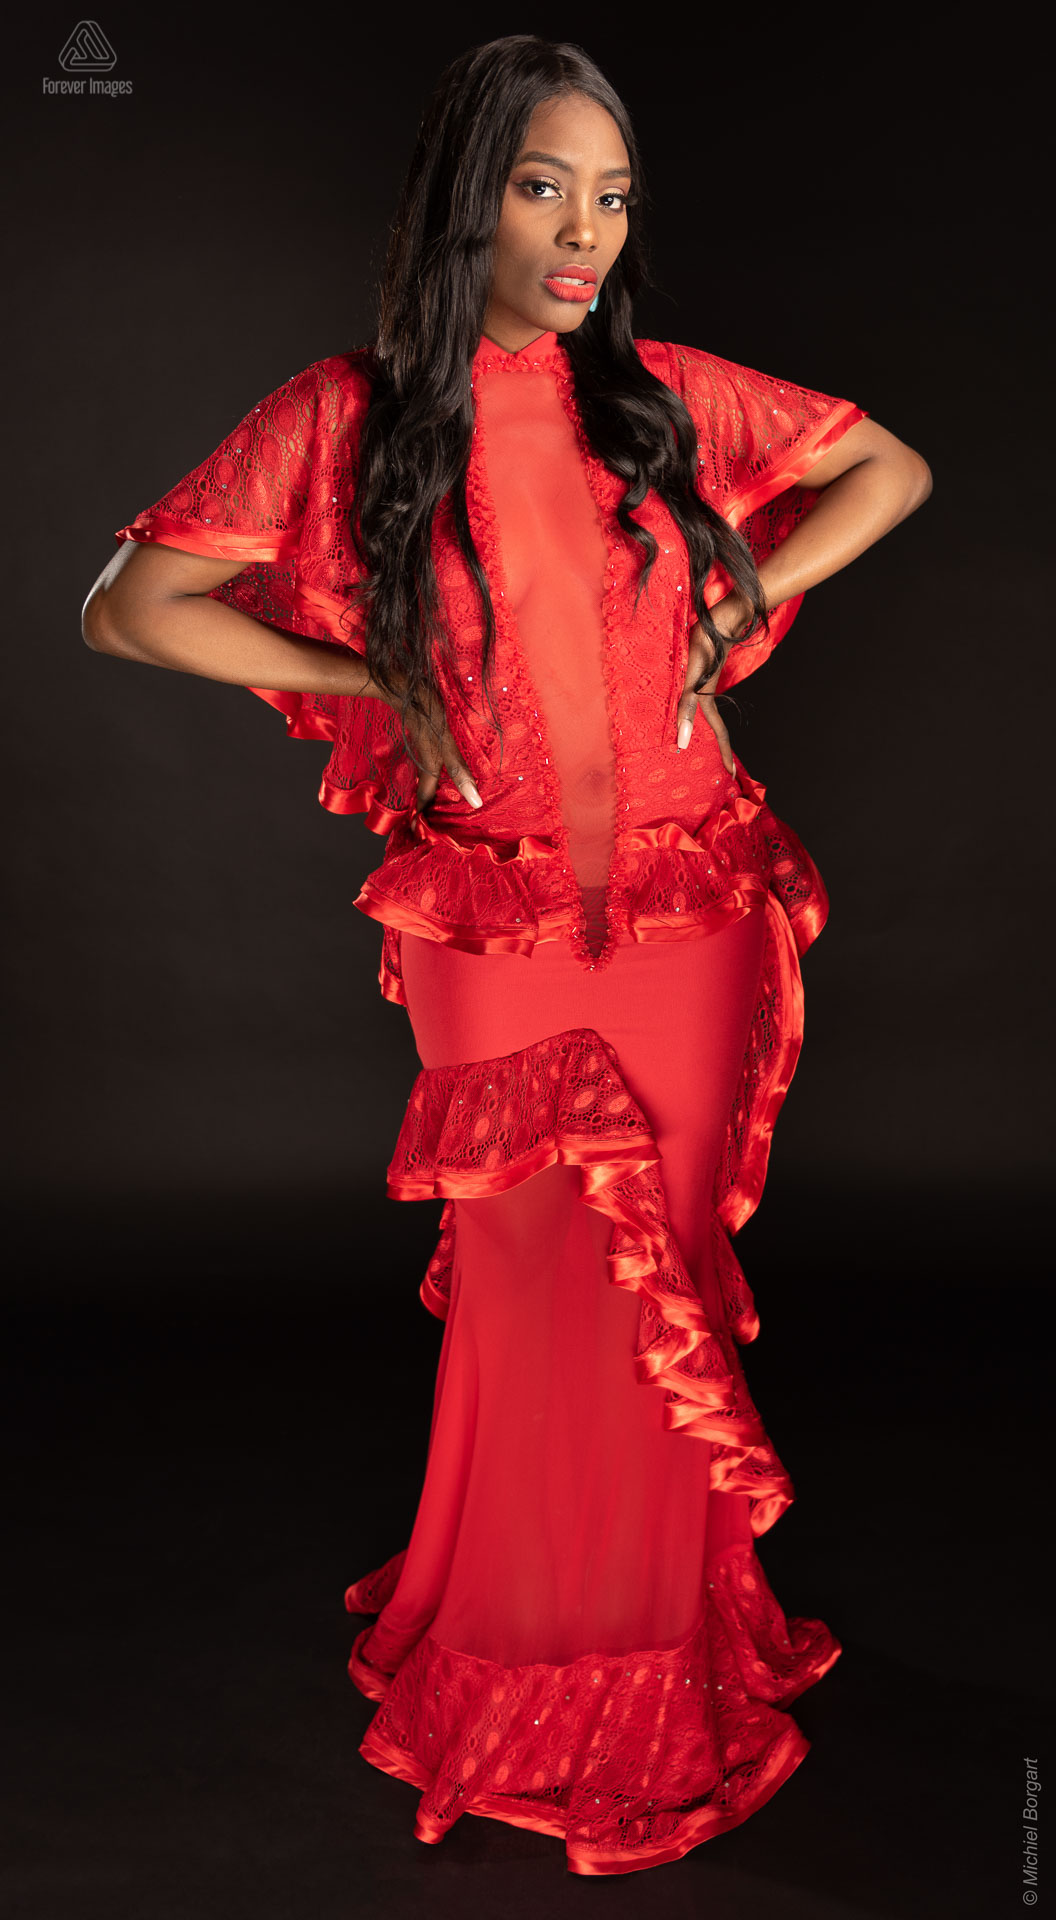 Fashionfoto rode jurk totaal handen in zij | Mariana Pietersz Miss Avantgarde Ronald Rizzo Piu Colore | Fashionfotograaf Michiel Borgart - Forever Images.